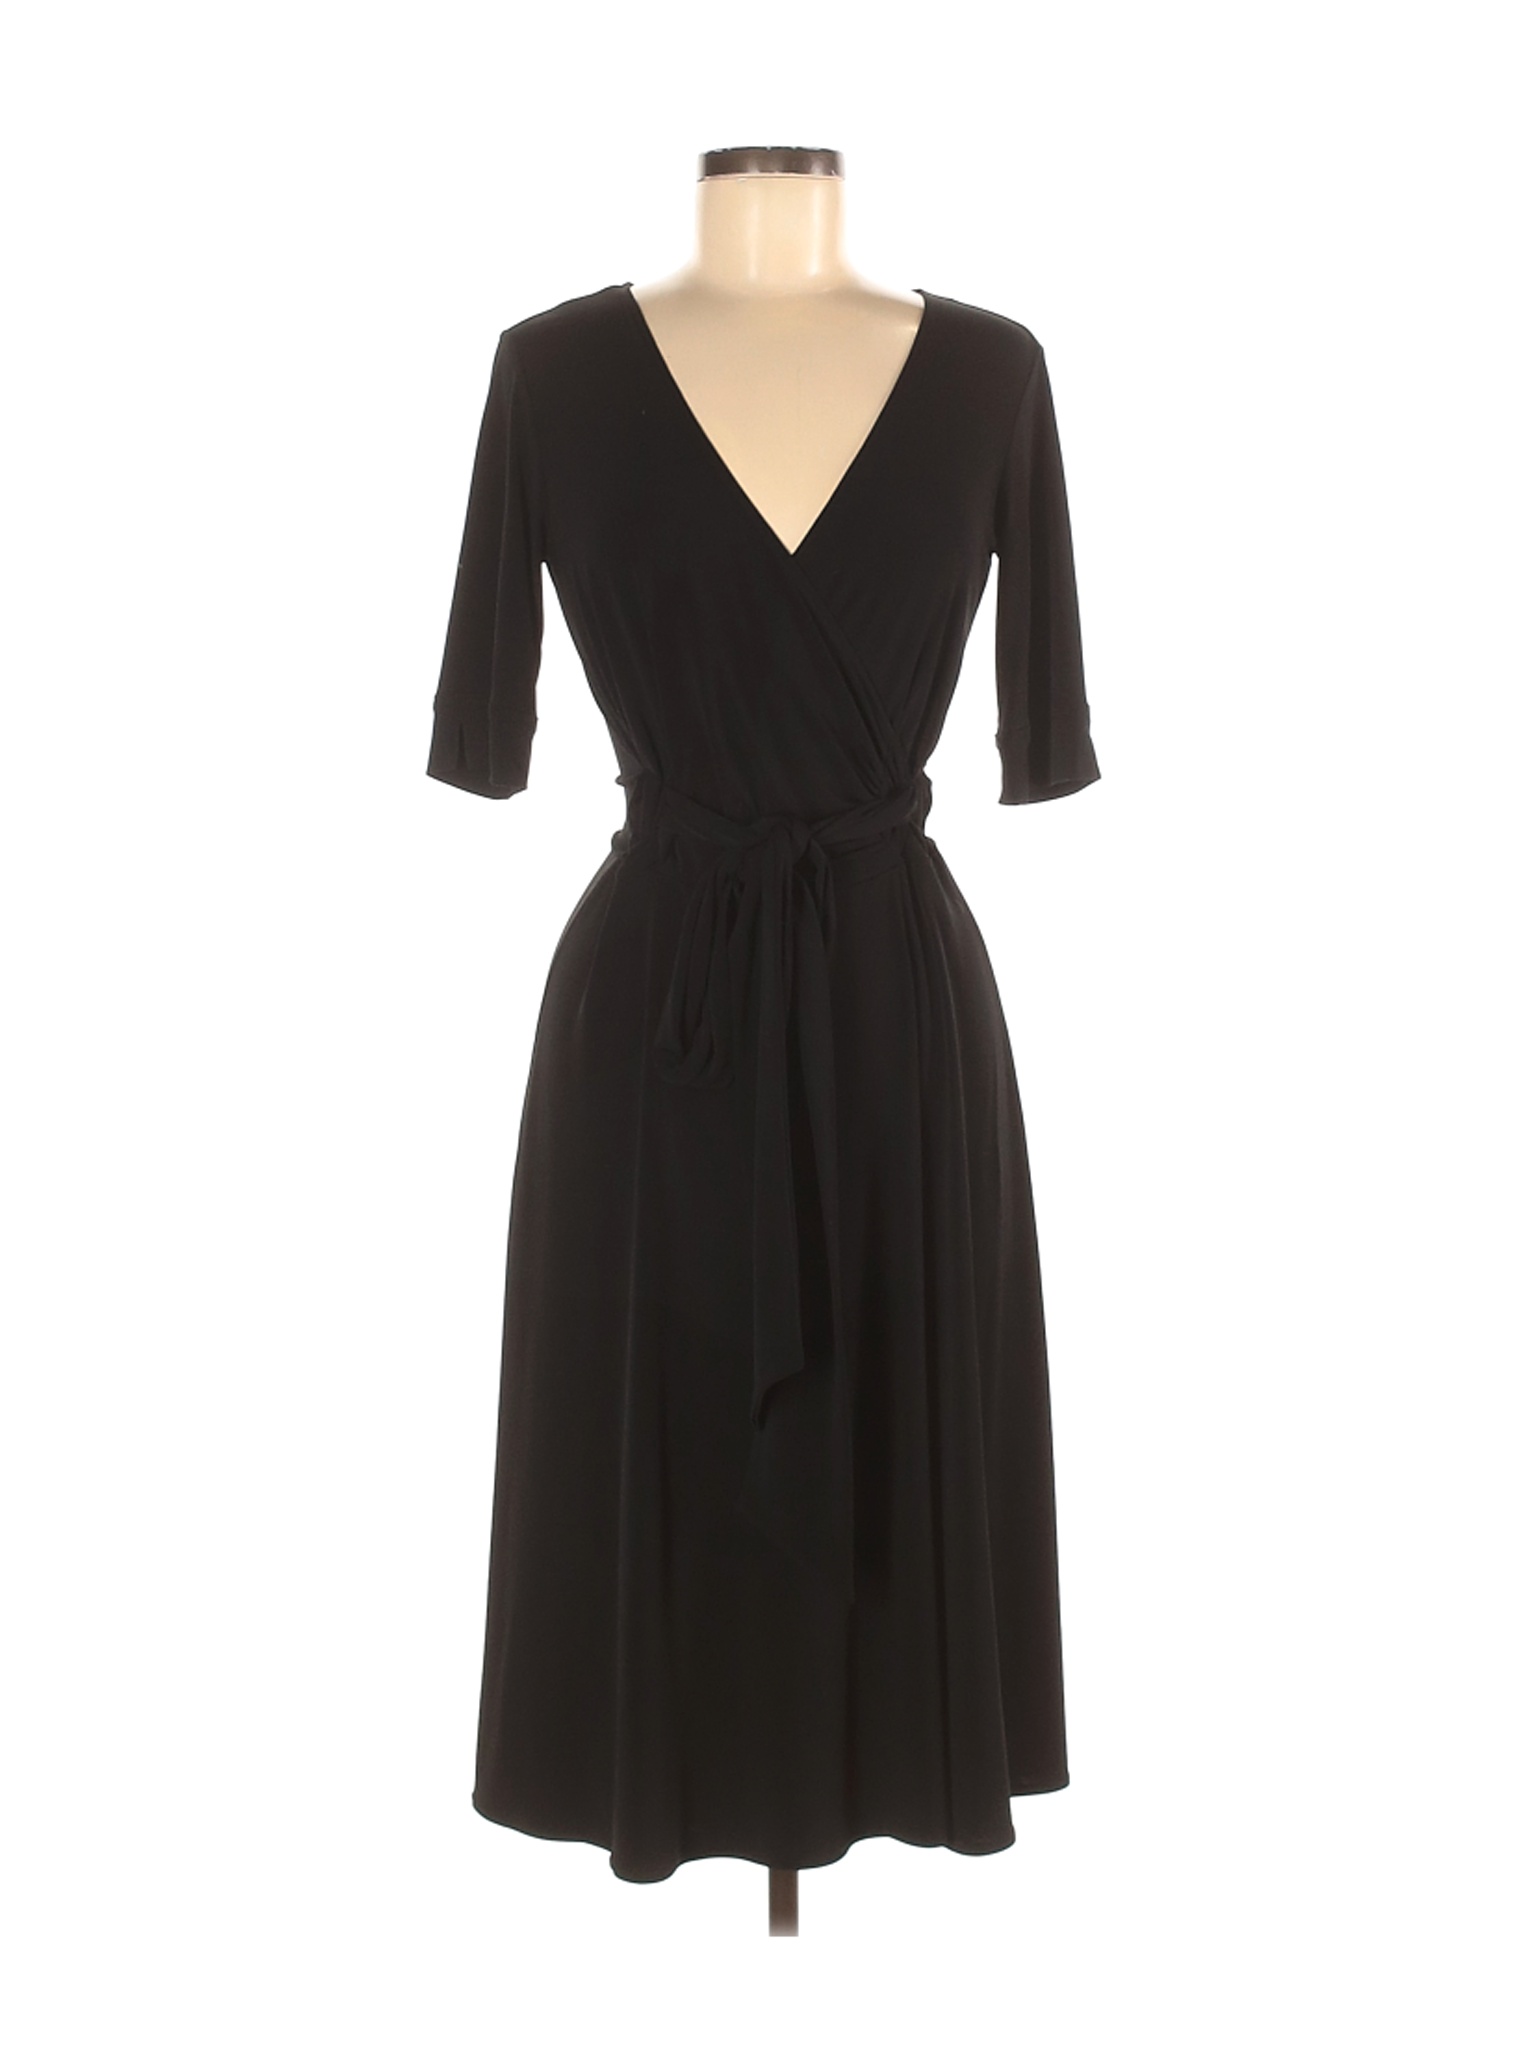 Donna Morgan Women Black Casual Dress 8 | eBay